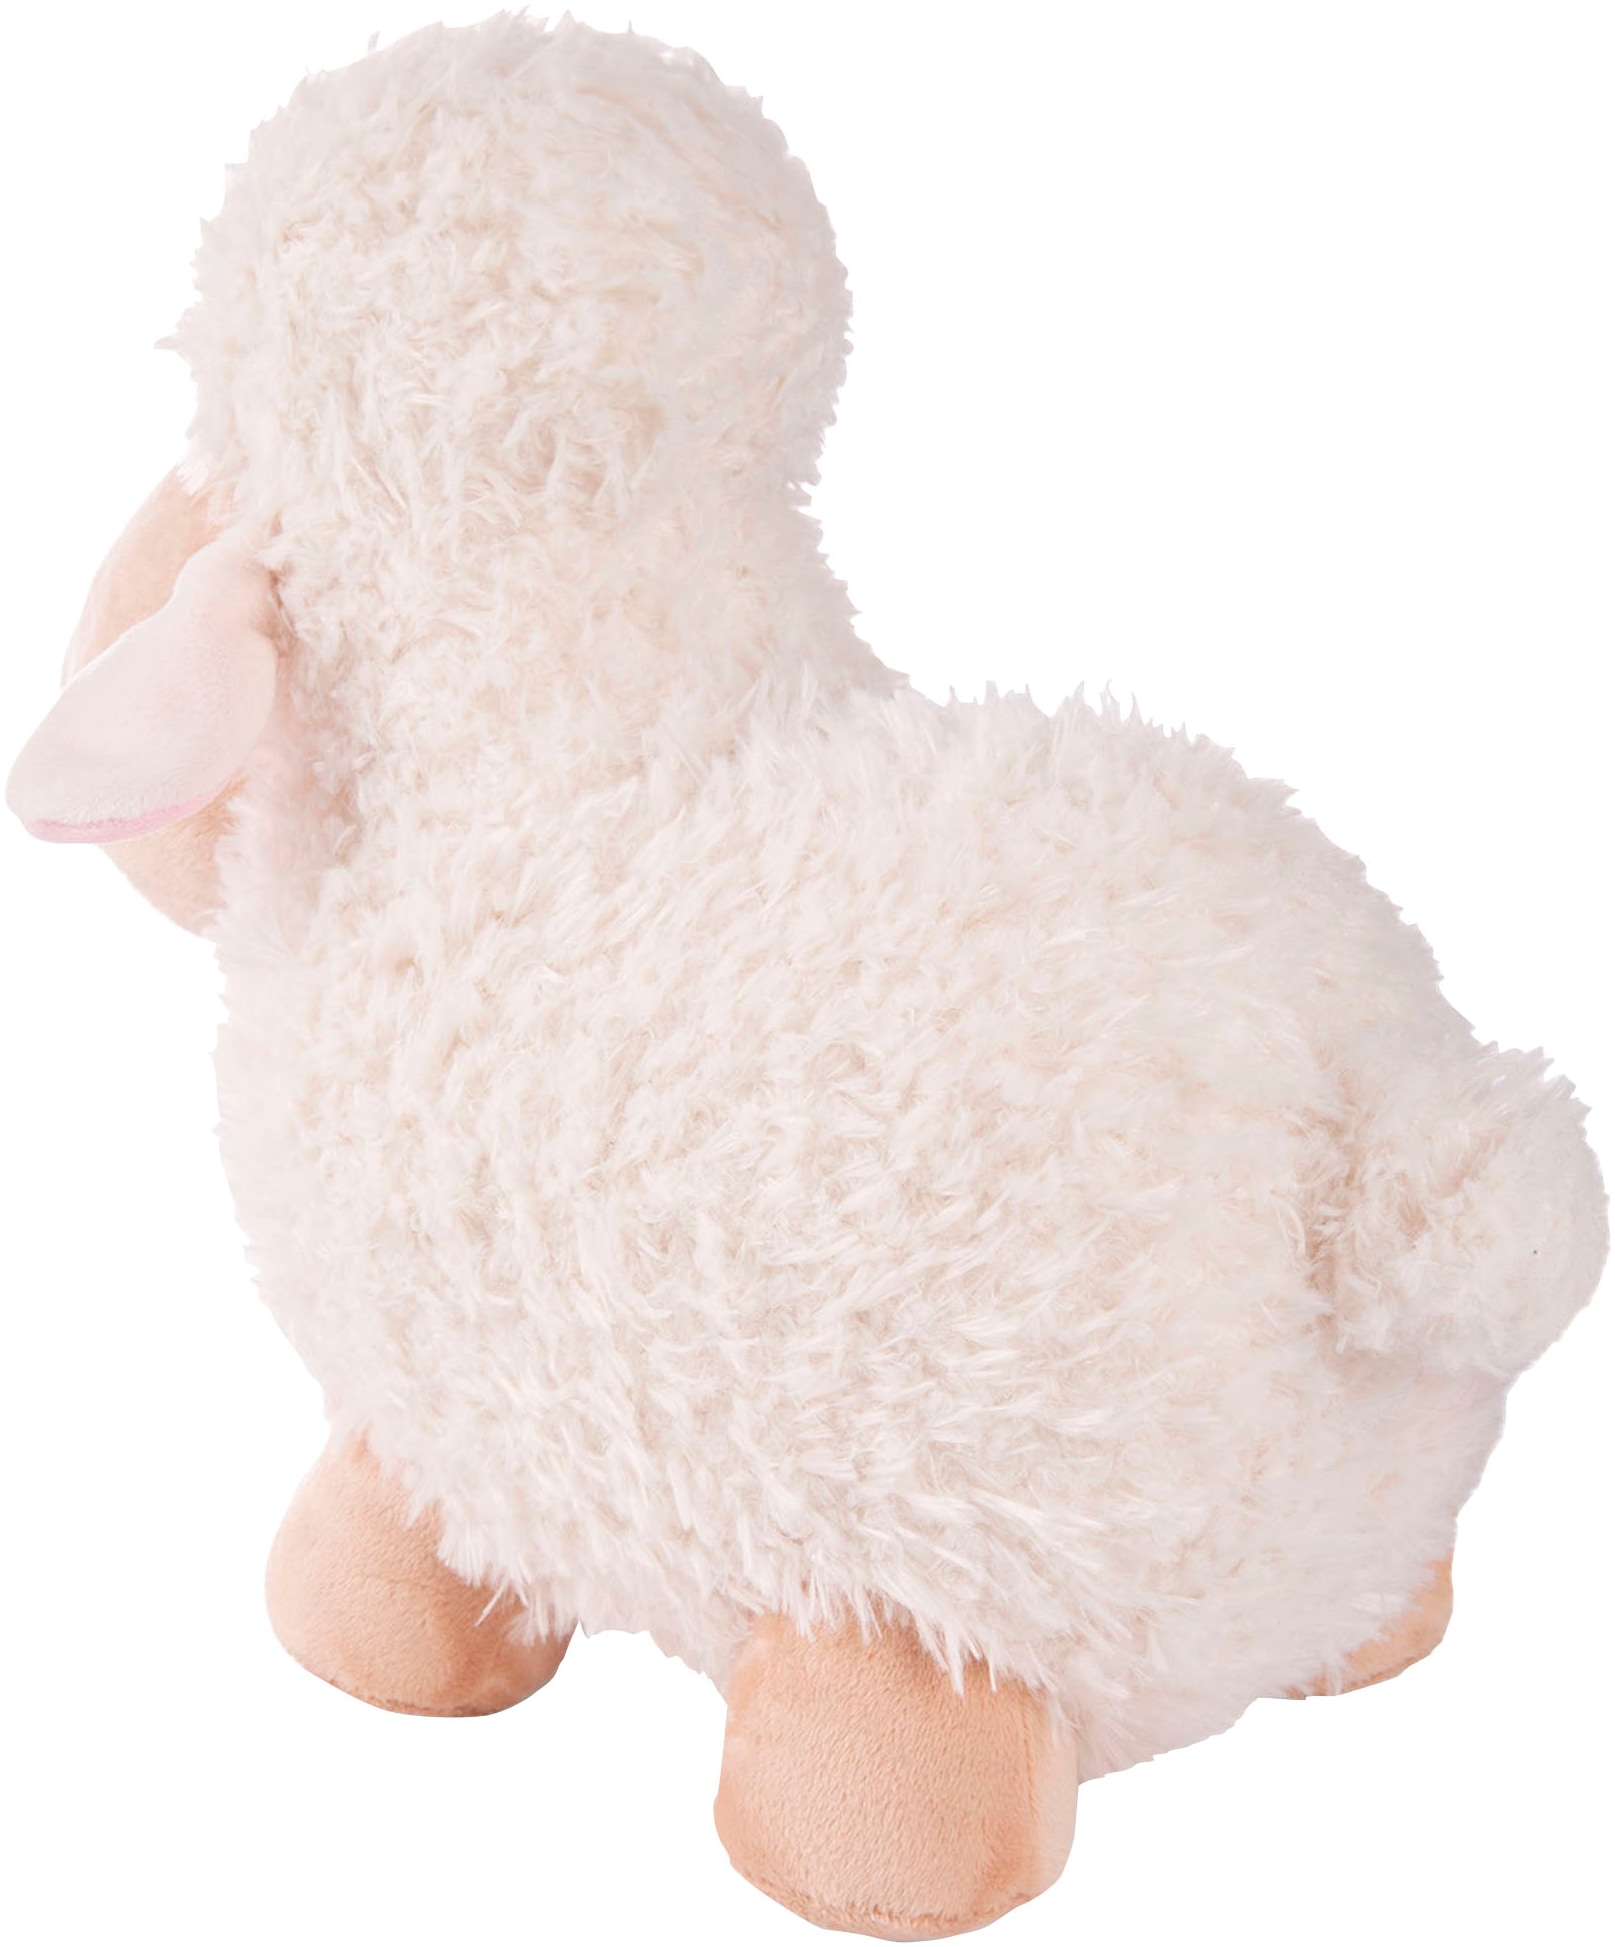 Nici Kuscheltier »Wooly Gang, Schaf weiß, 22 cm«, stehend, enthält recyceltes Material (Global Recycled Standard)